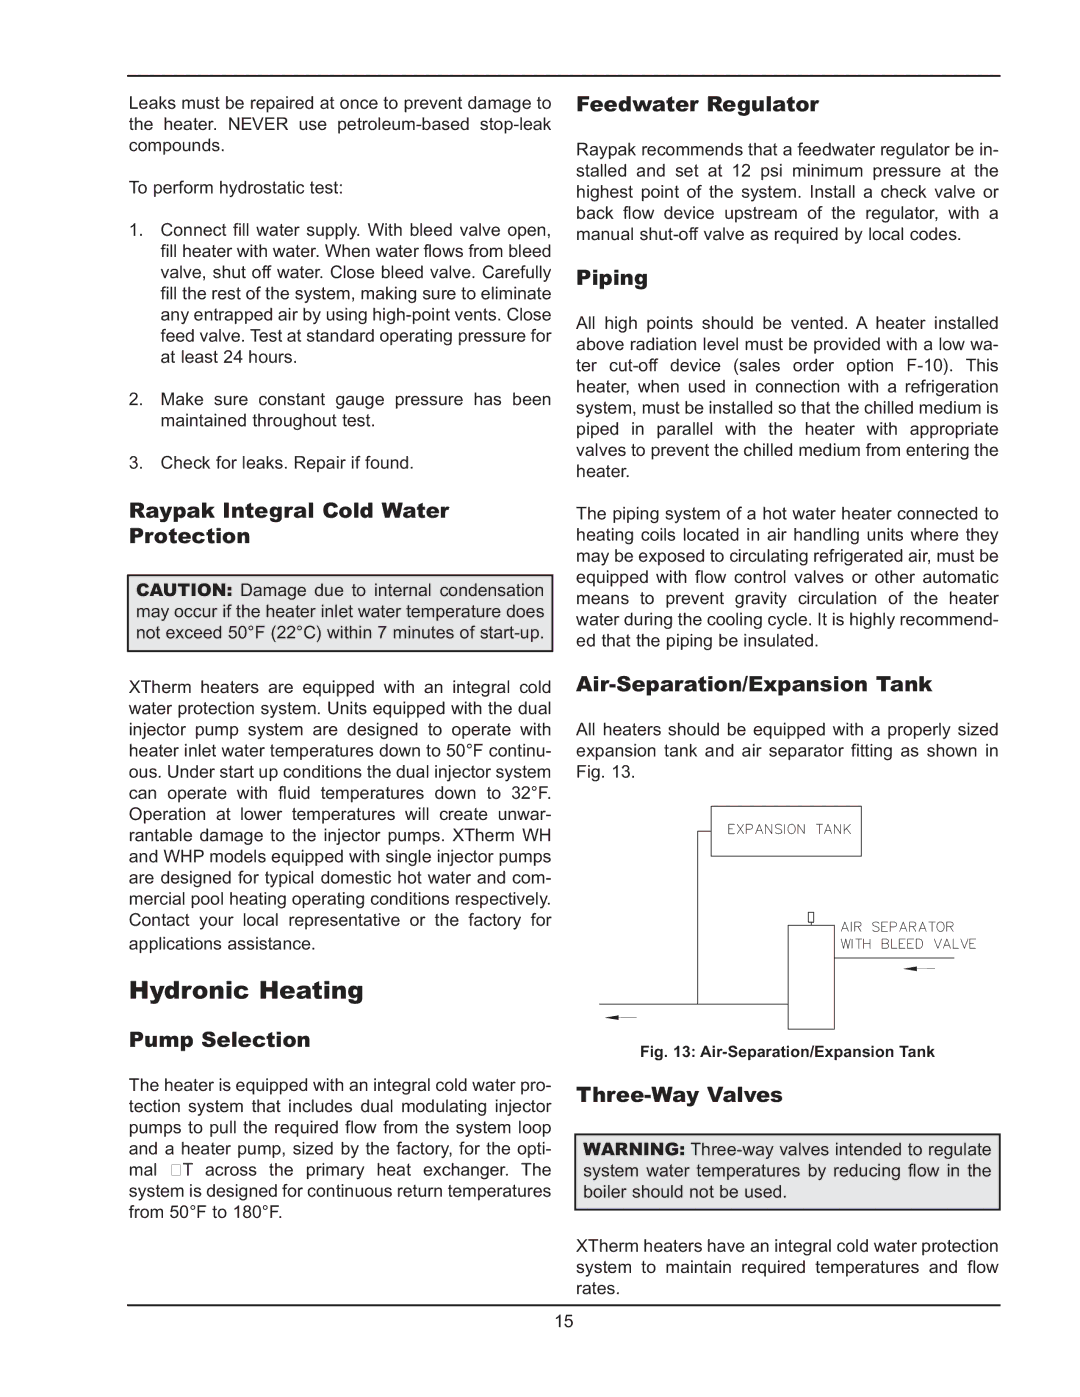 Raypak 1005 operating instructions Hydronic Heating 